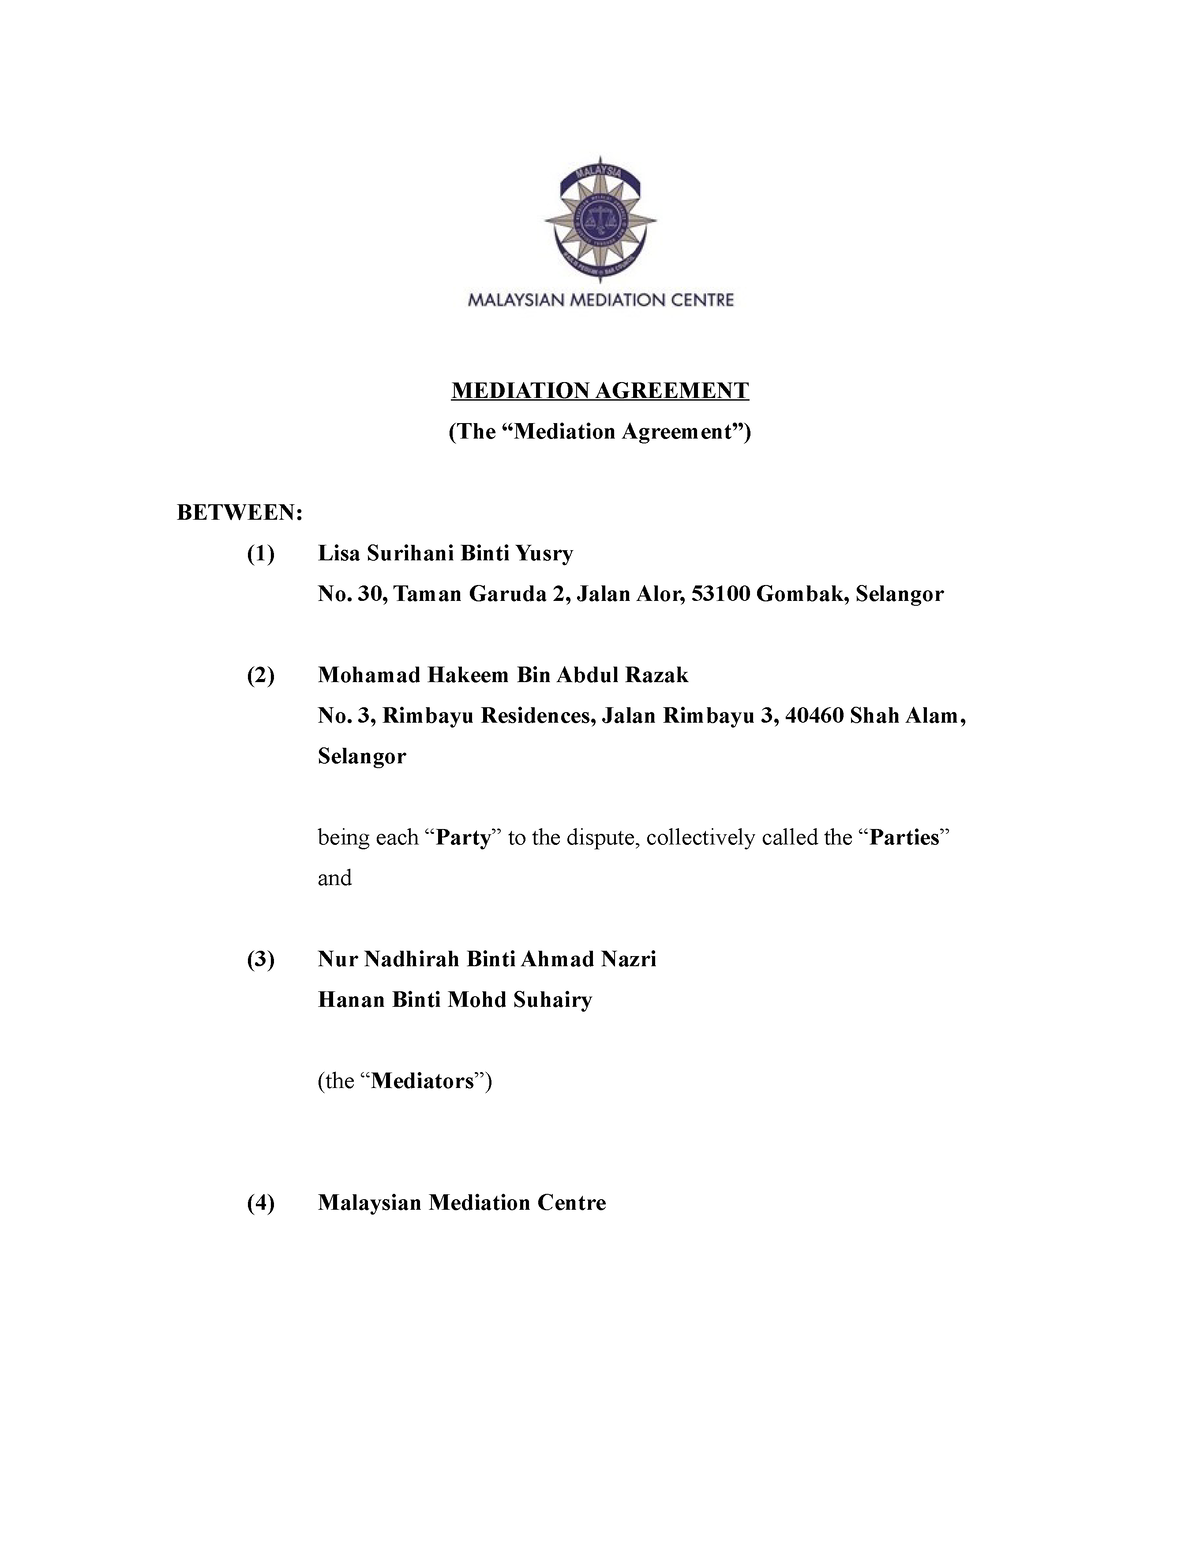 mediation settlement agreement template